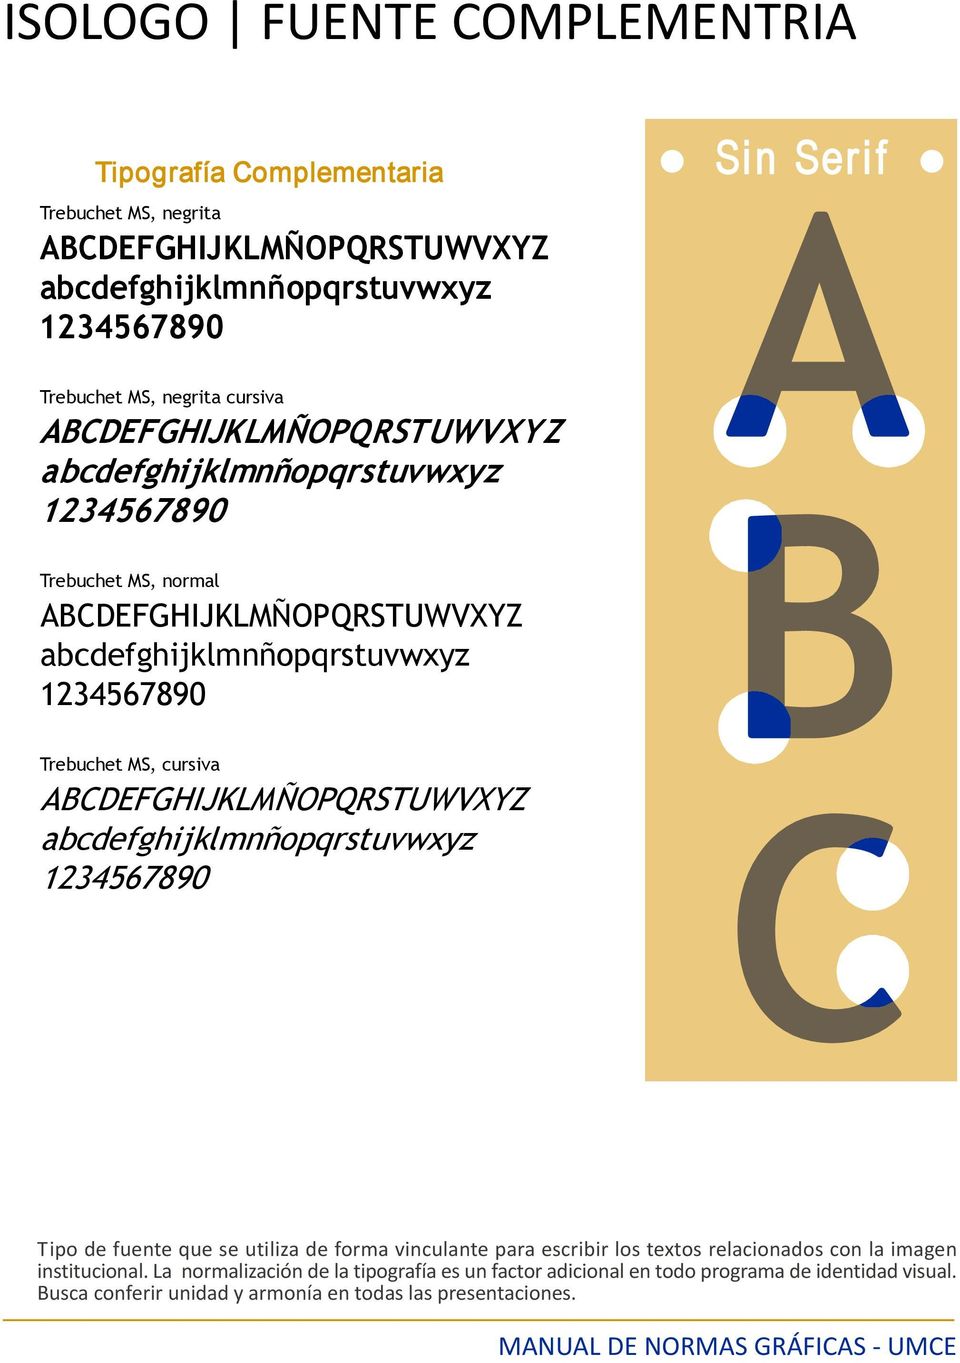 ABCDEFGHIJKLMÑOPQRSTUWVXYZ abcdefghijklmnñopqrstuvwxyz 1234567890 Sin Serif A B C Tipo de fuente que se utiliza de forma vinculante para escribir los textos relacionados con